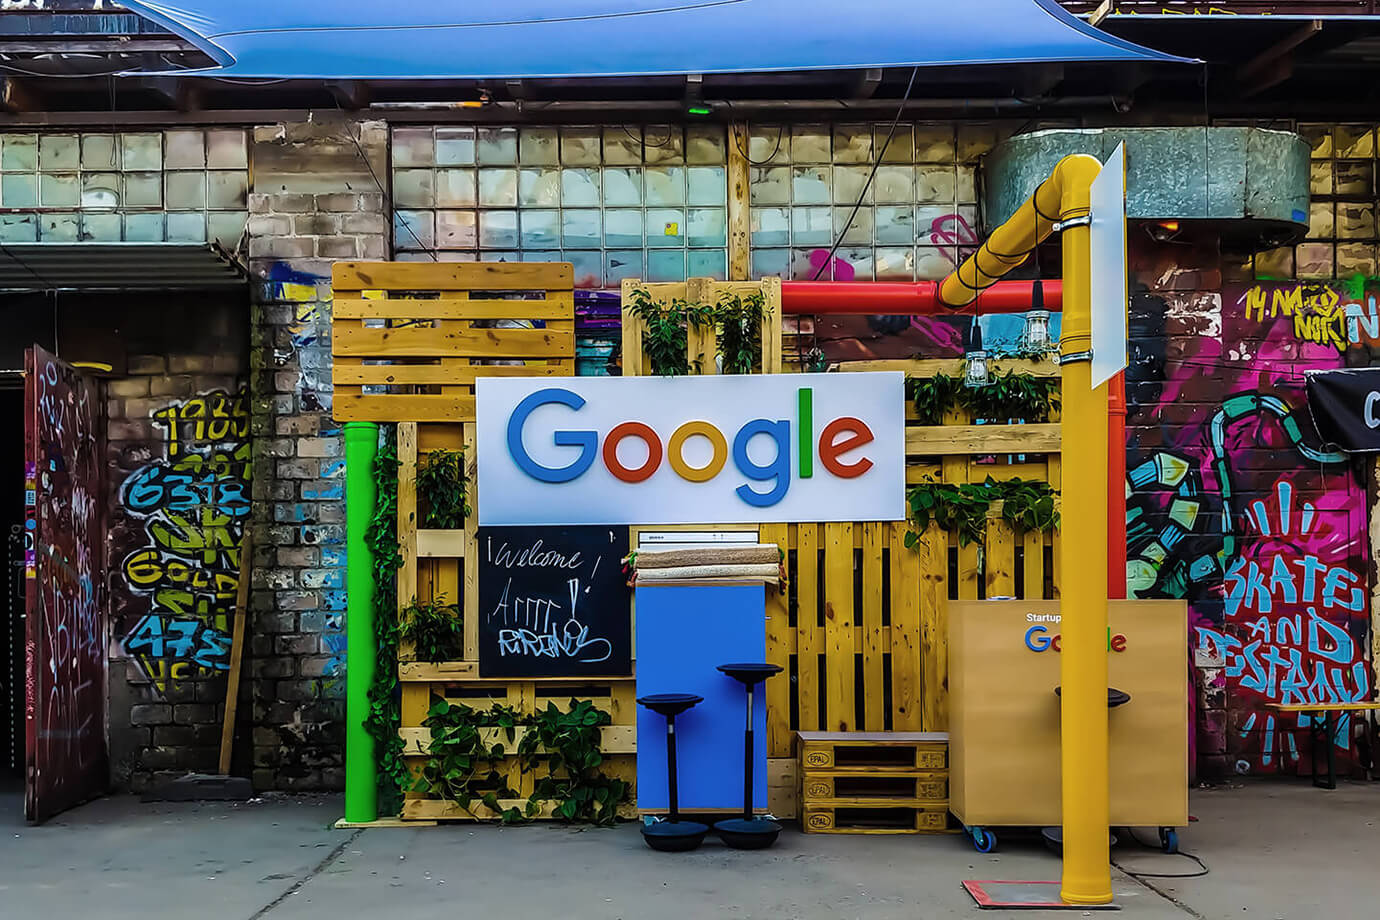 Google logo beside building near painted walls at daytime, Rajeshaw Bachu, Unsplash